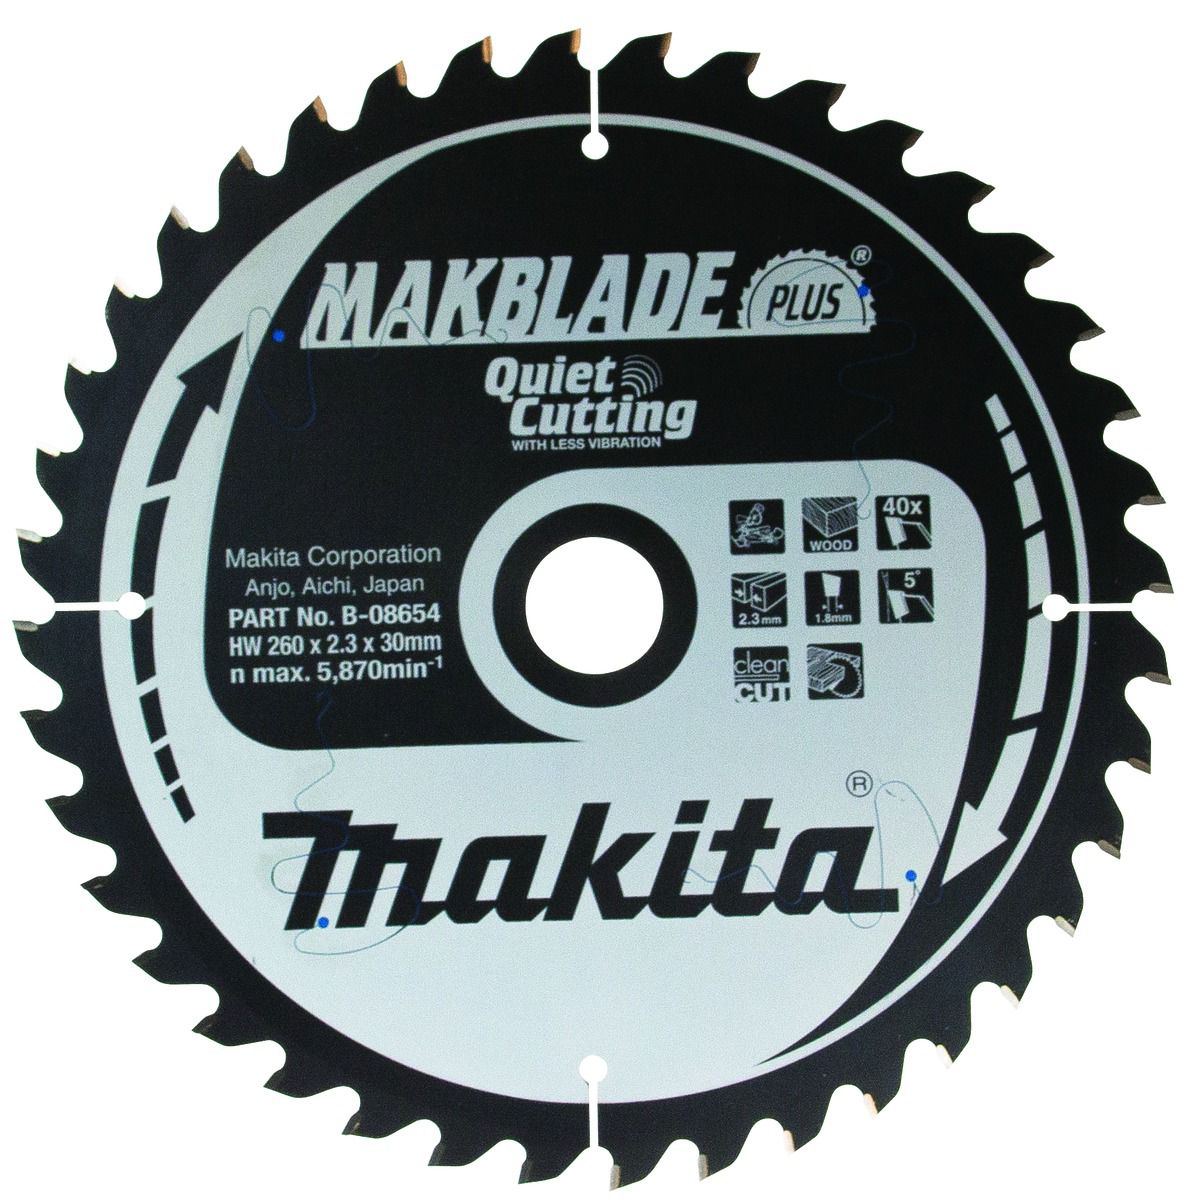 Image of Makita B-08654 Makblade Plus 40 Teeth Circular Saw Blade - 260 x 30mm